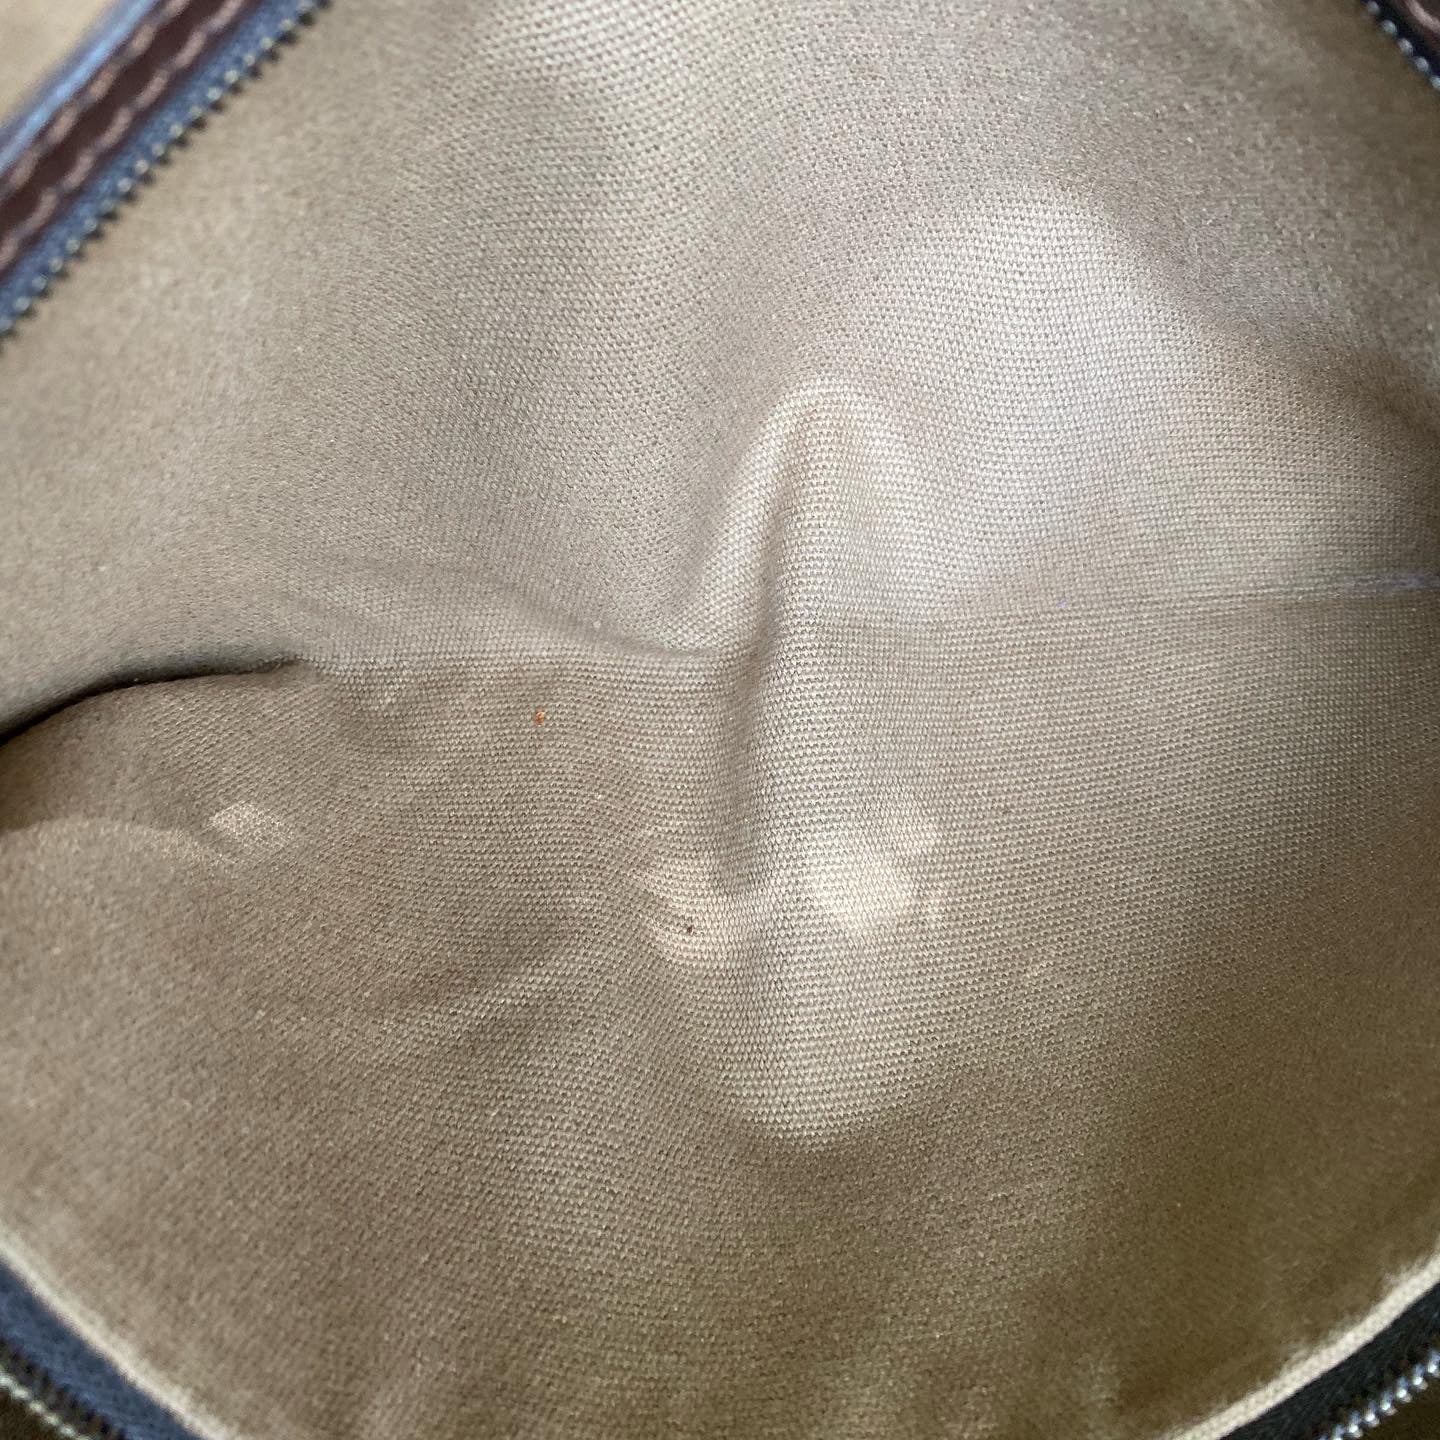 Preloved Authentic Utah Huron brown leather brief case/ document handbag